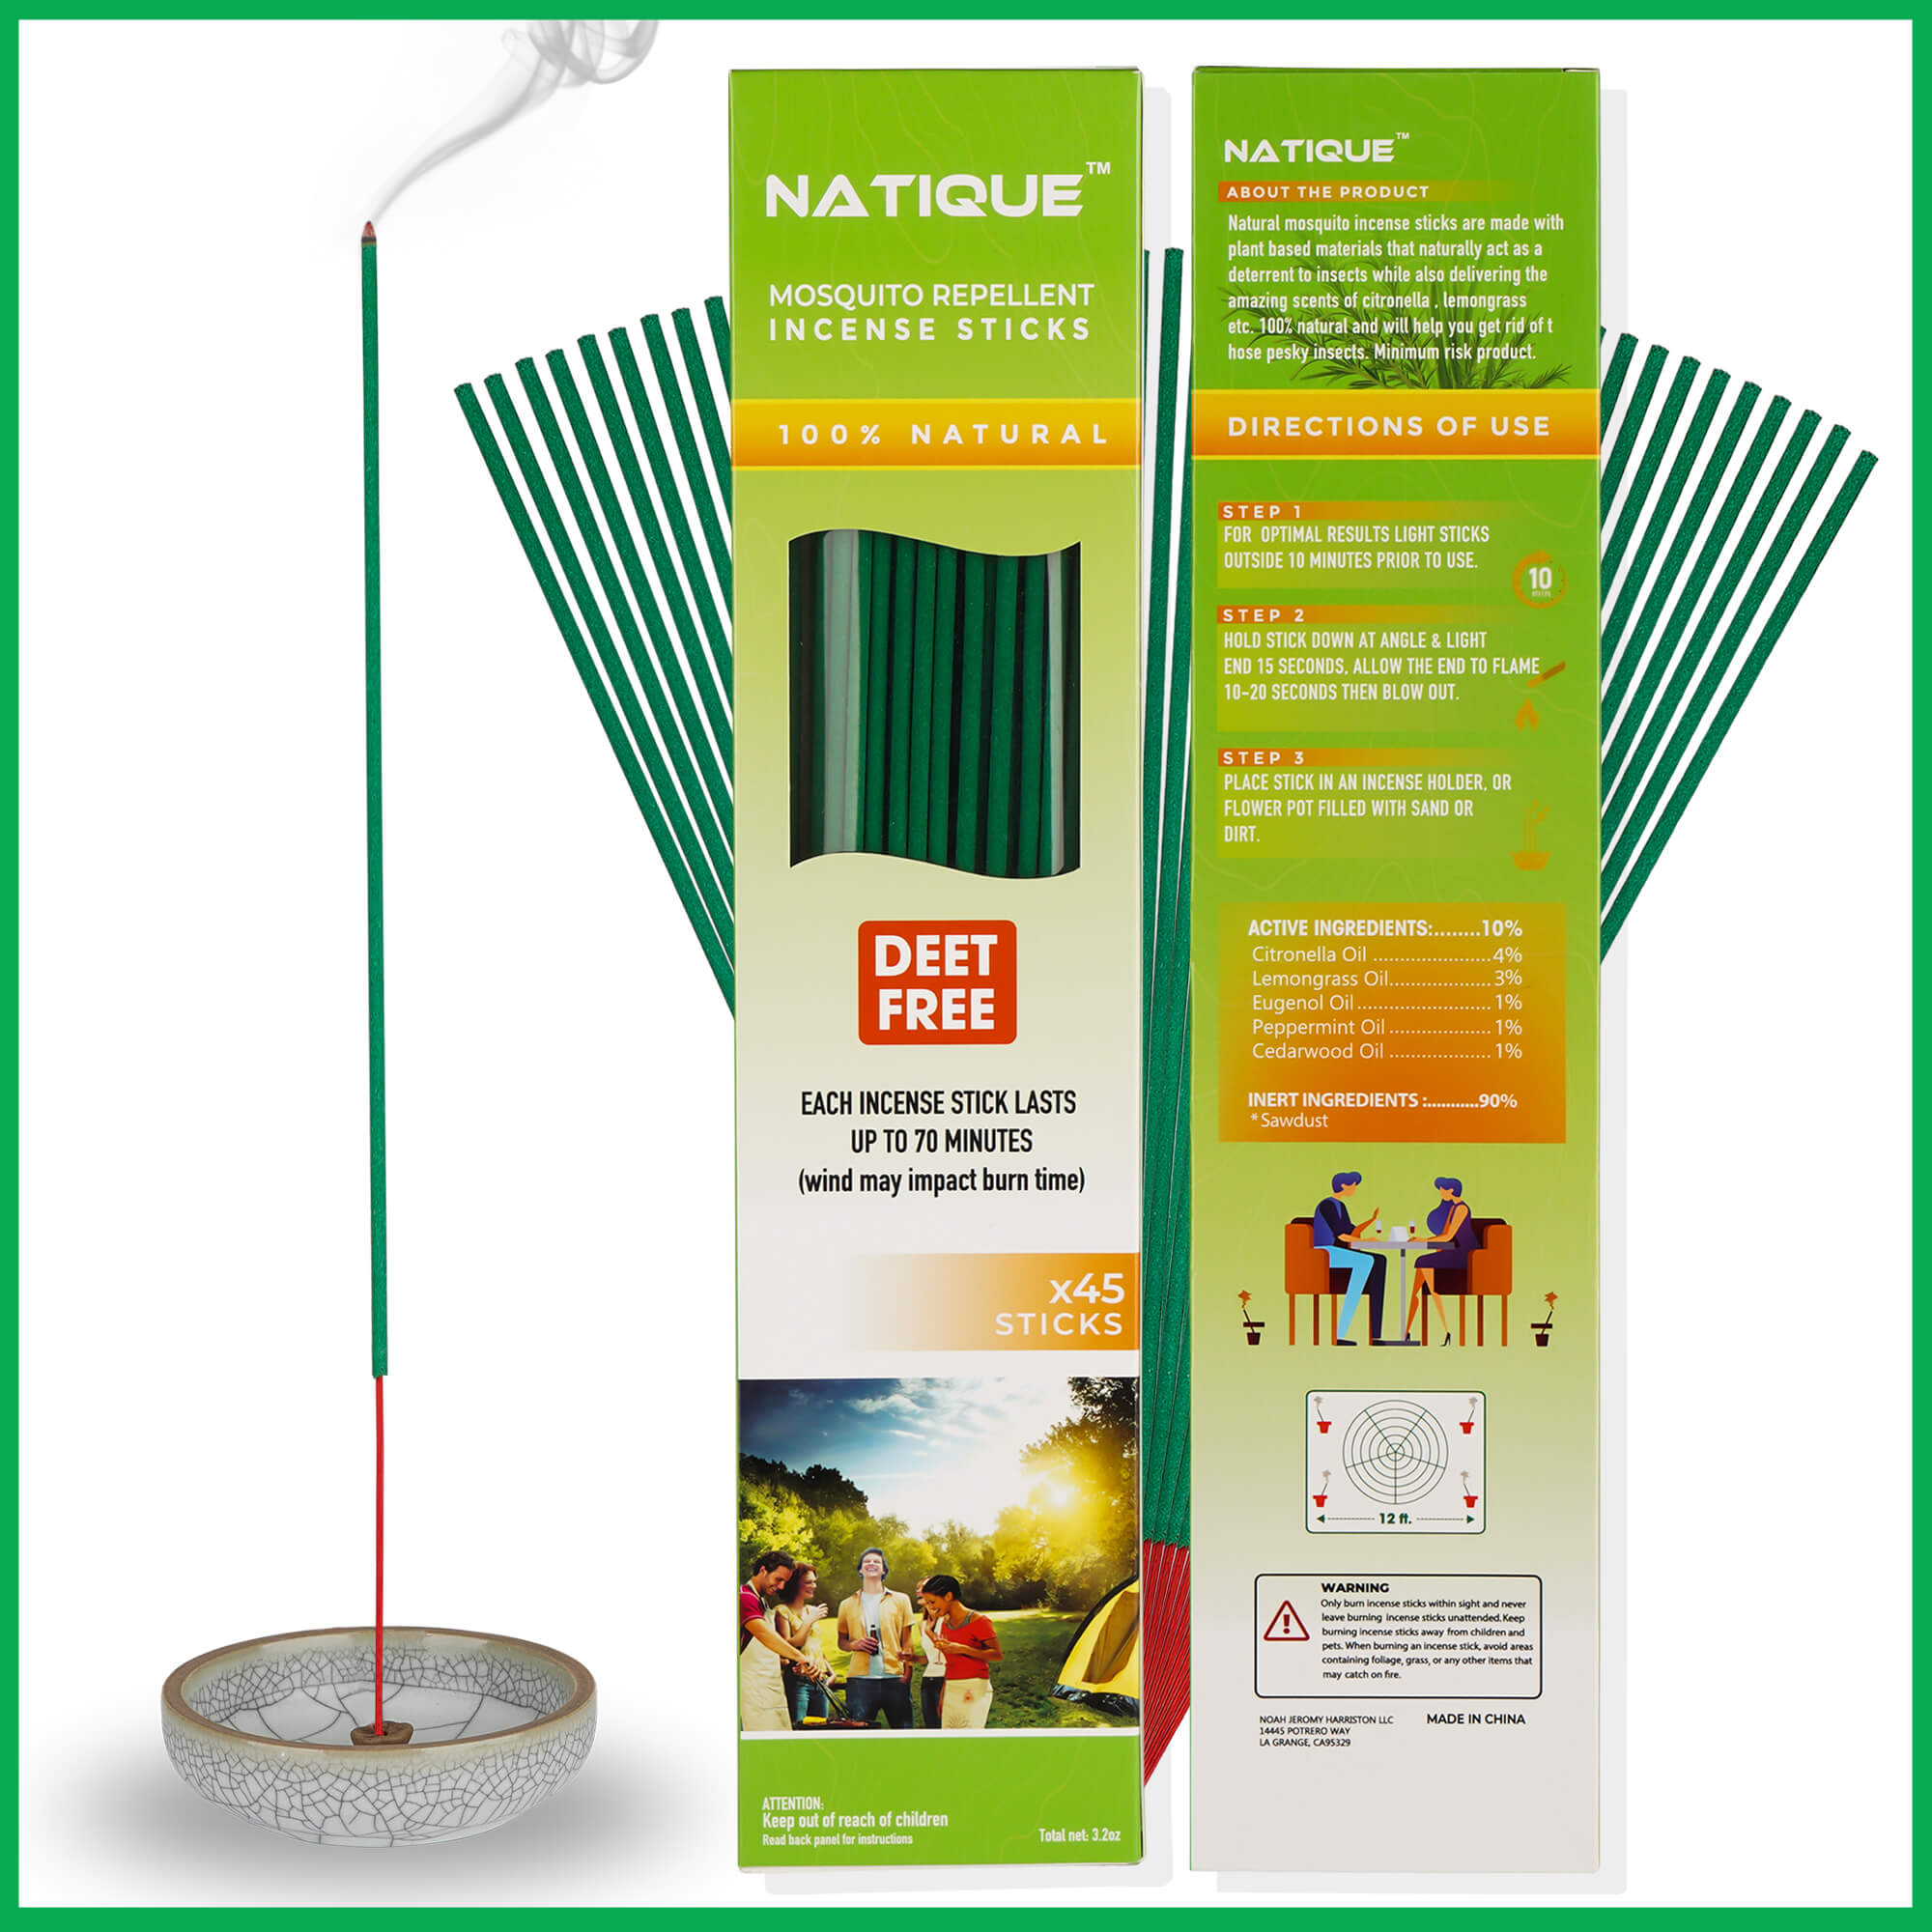 Natique's Mini Mosquito Repellent Incense Sticks - Chemical & DEET Free, Natural Ingredients